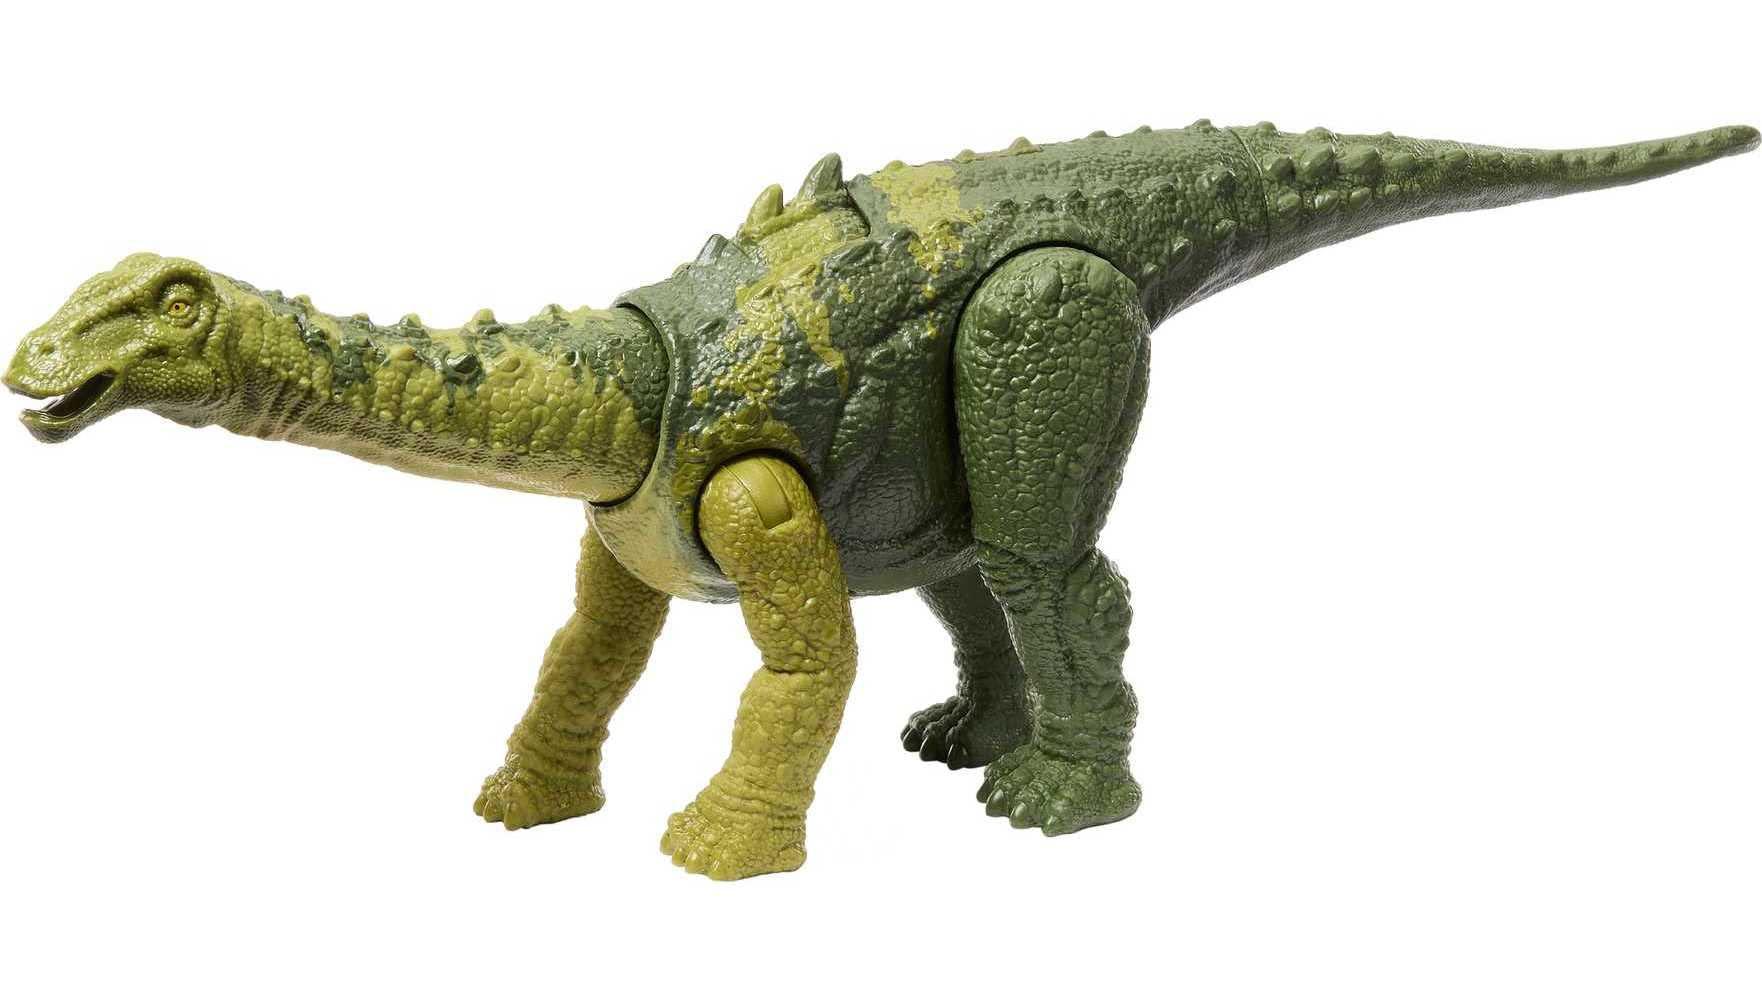 Mattel jurassic world dinosaur toy nigersaurus with roar sound & attack action, wild roar posable figure, physical & connected digit